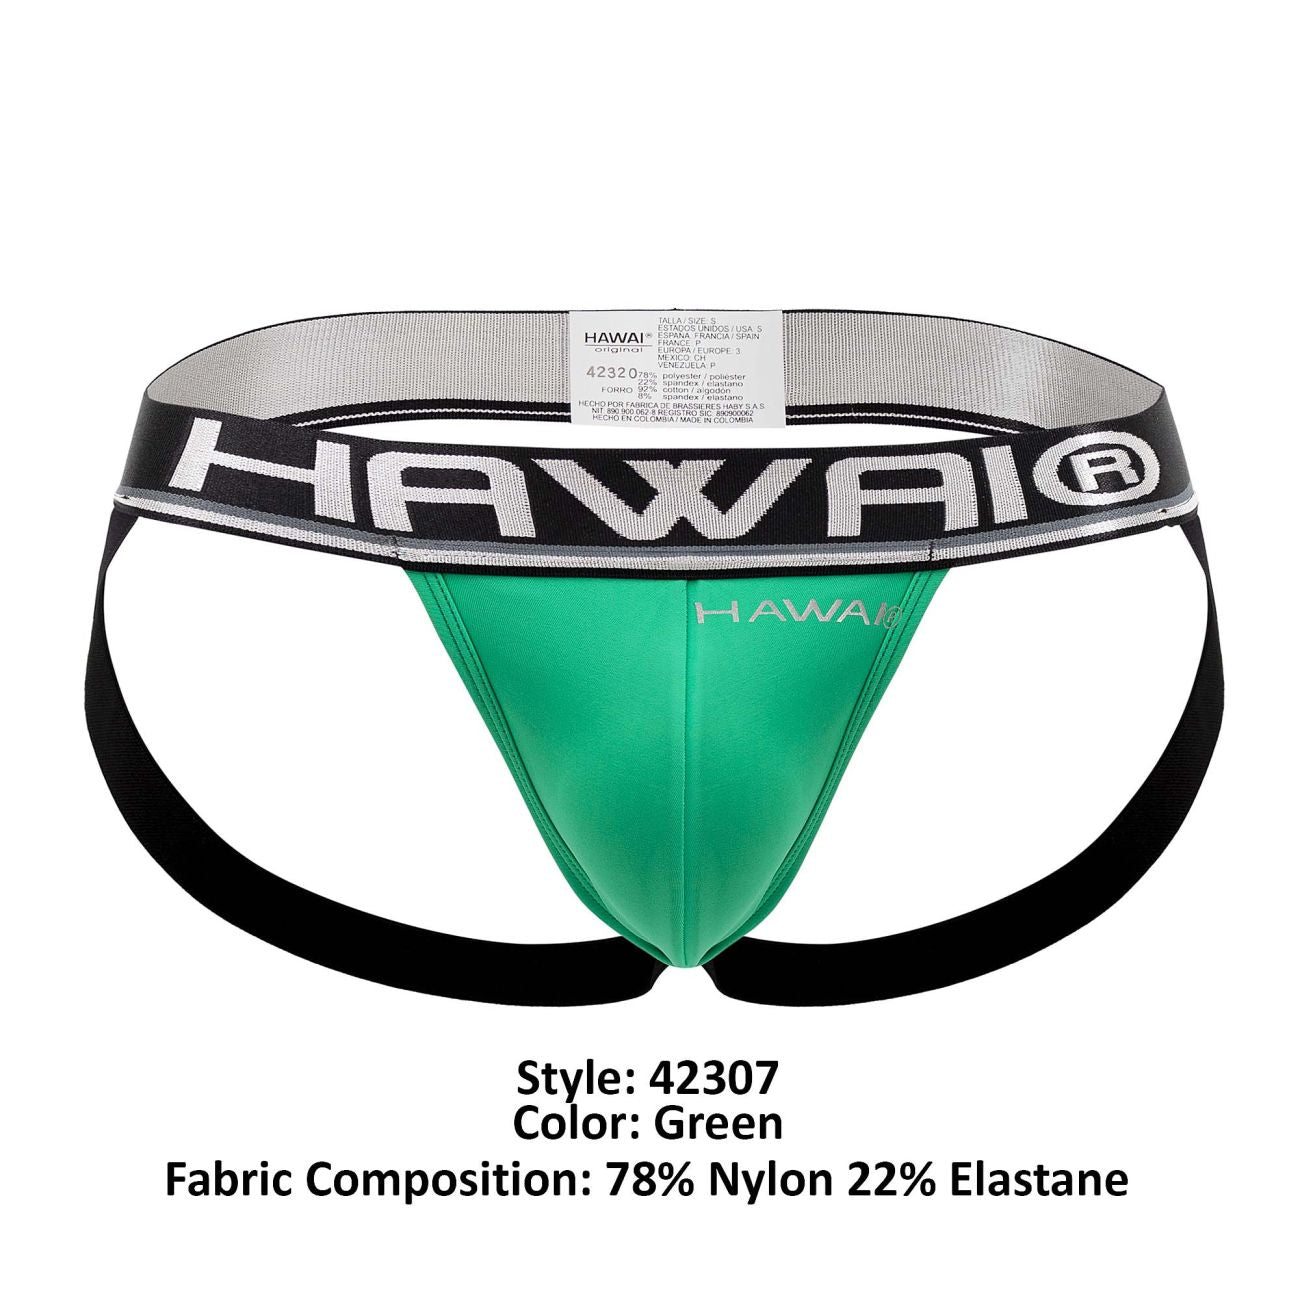 HAWAI 42307 Microfiber Jockstrap Green